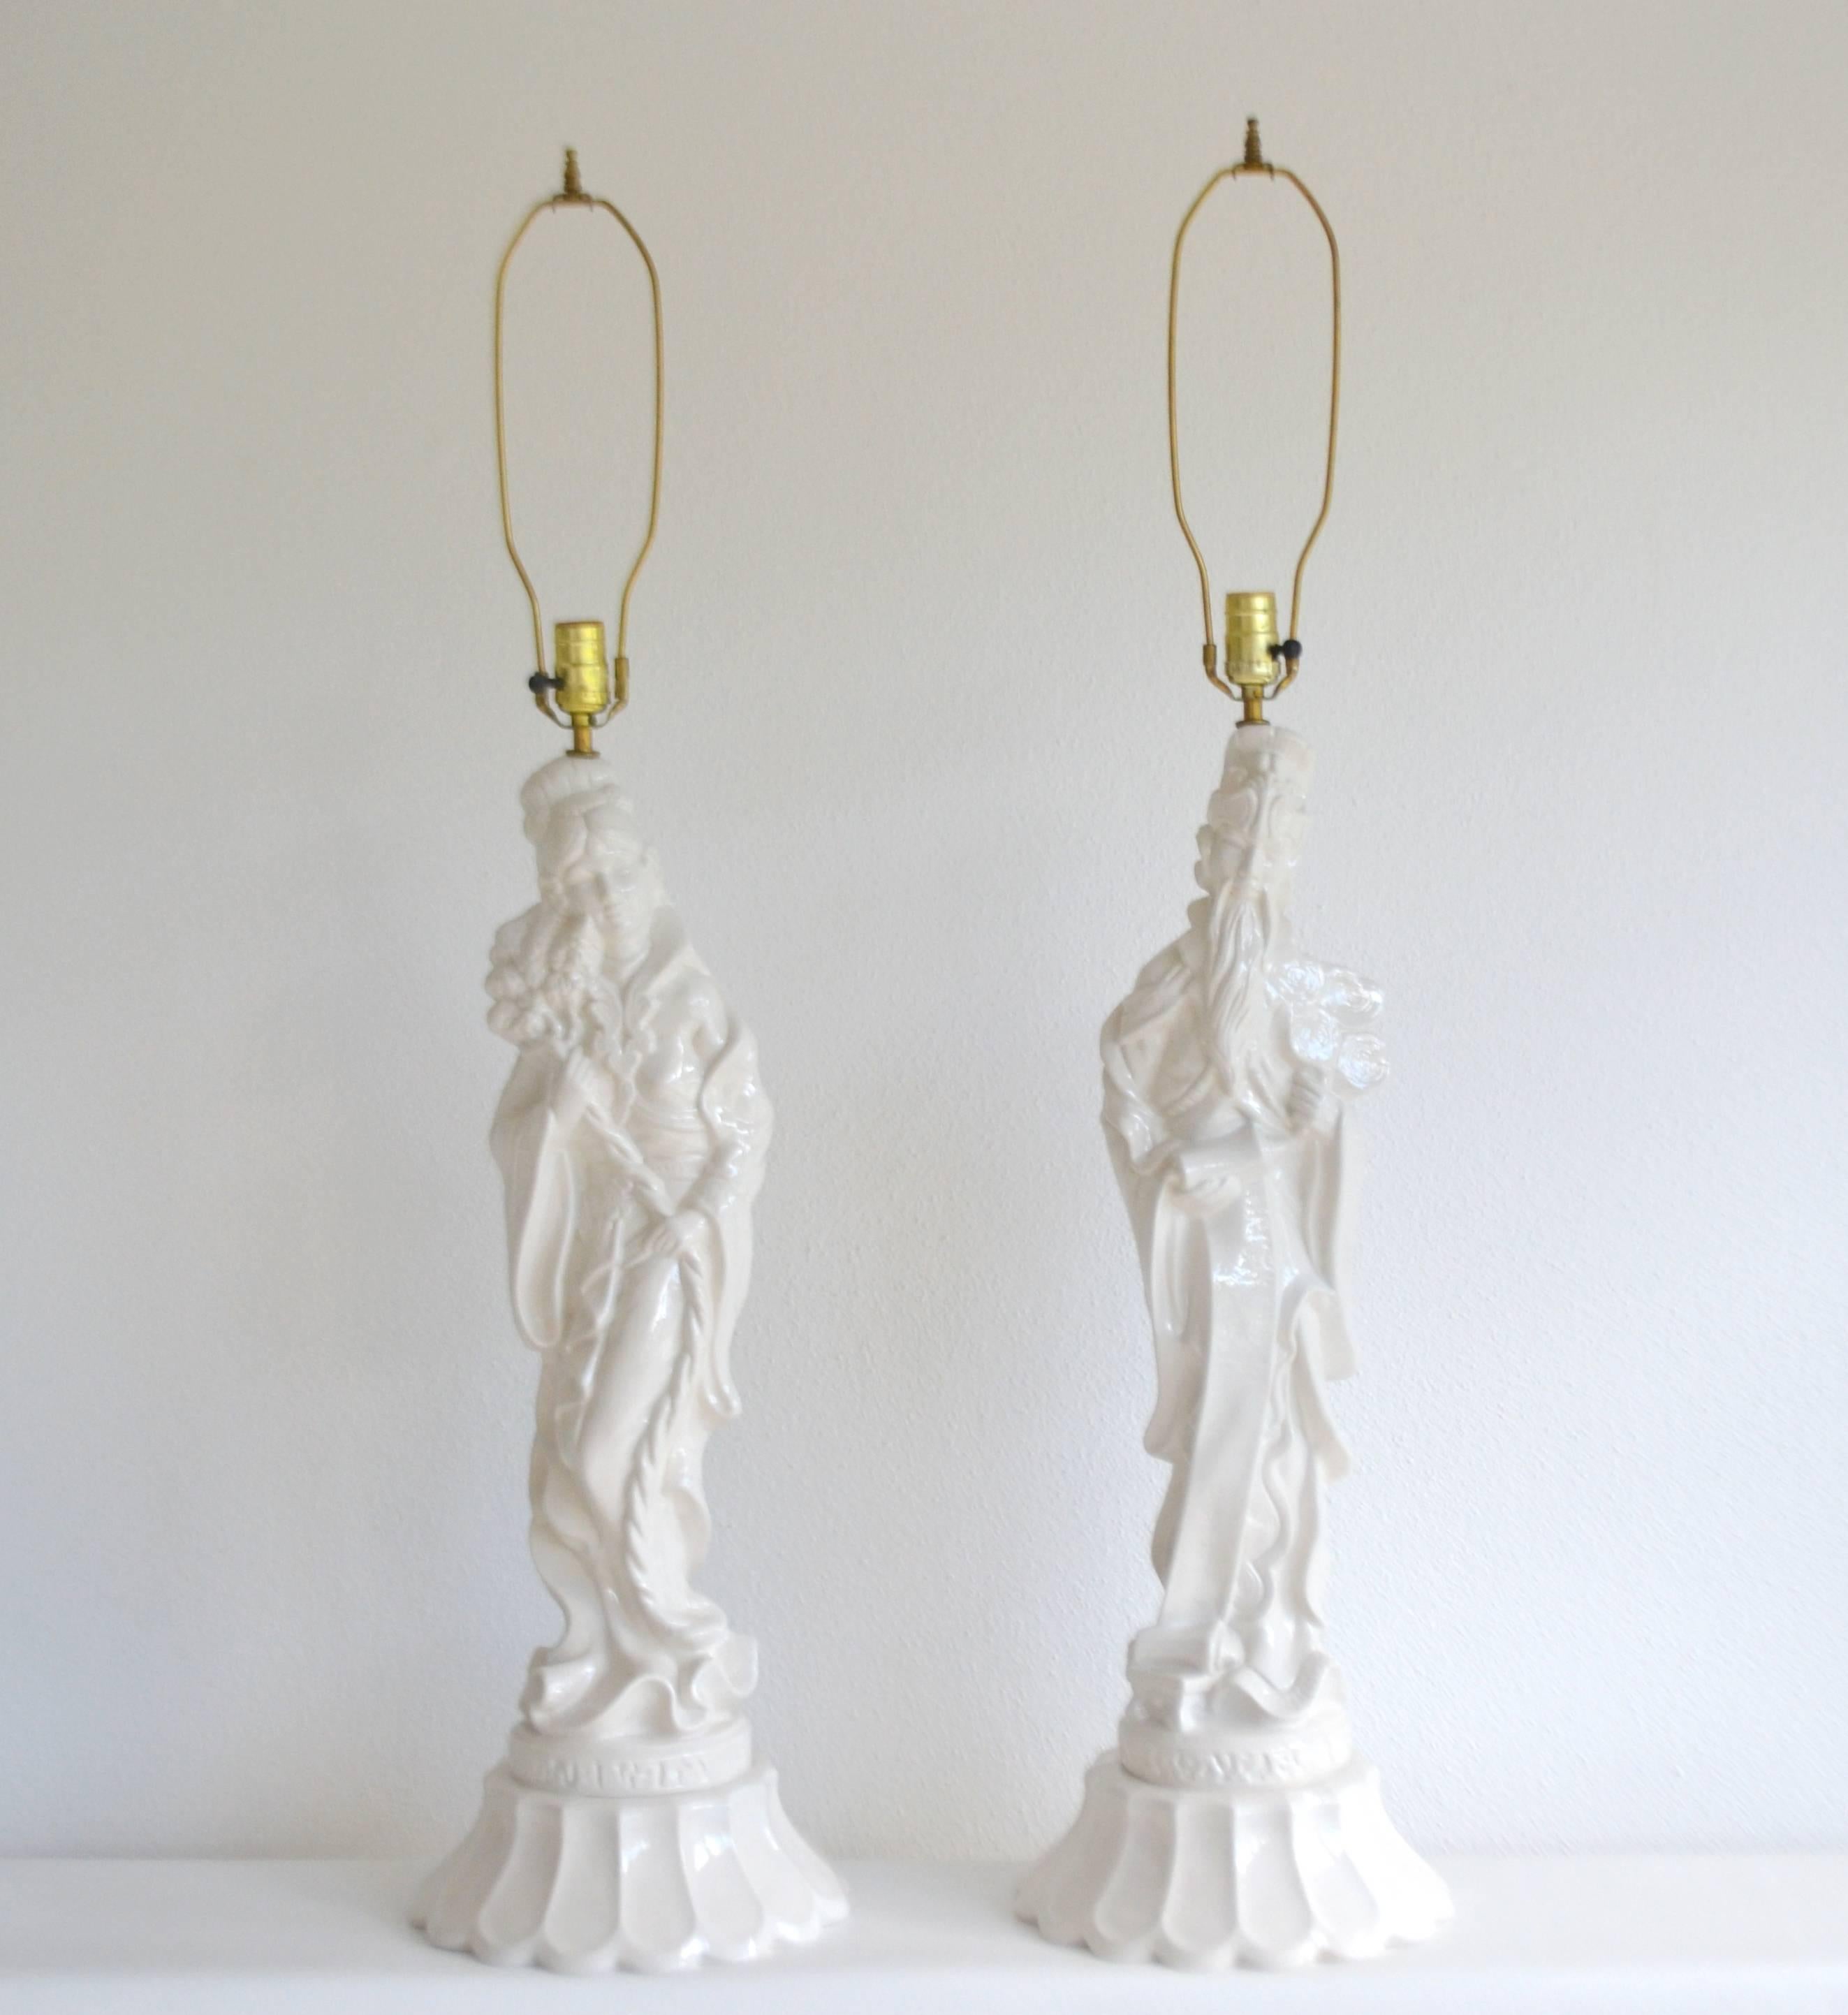 American Pair of Hollywood Regency Blanc de Chine Ceramic Table Lamps